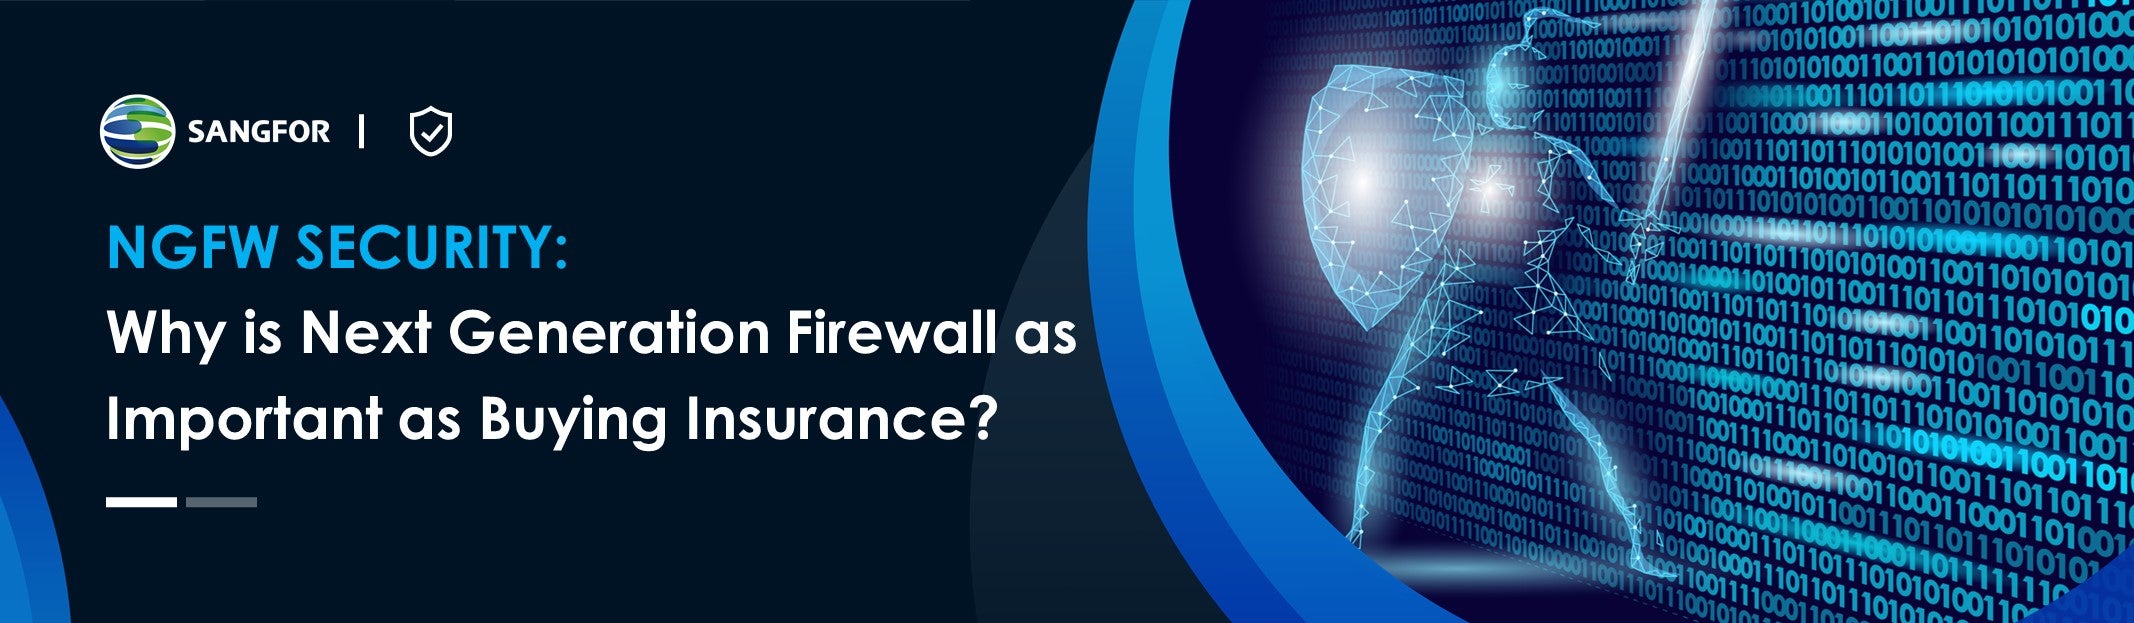 Next Generation Firewall Insurance Article